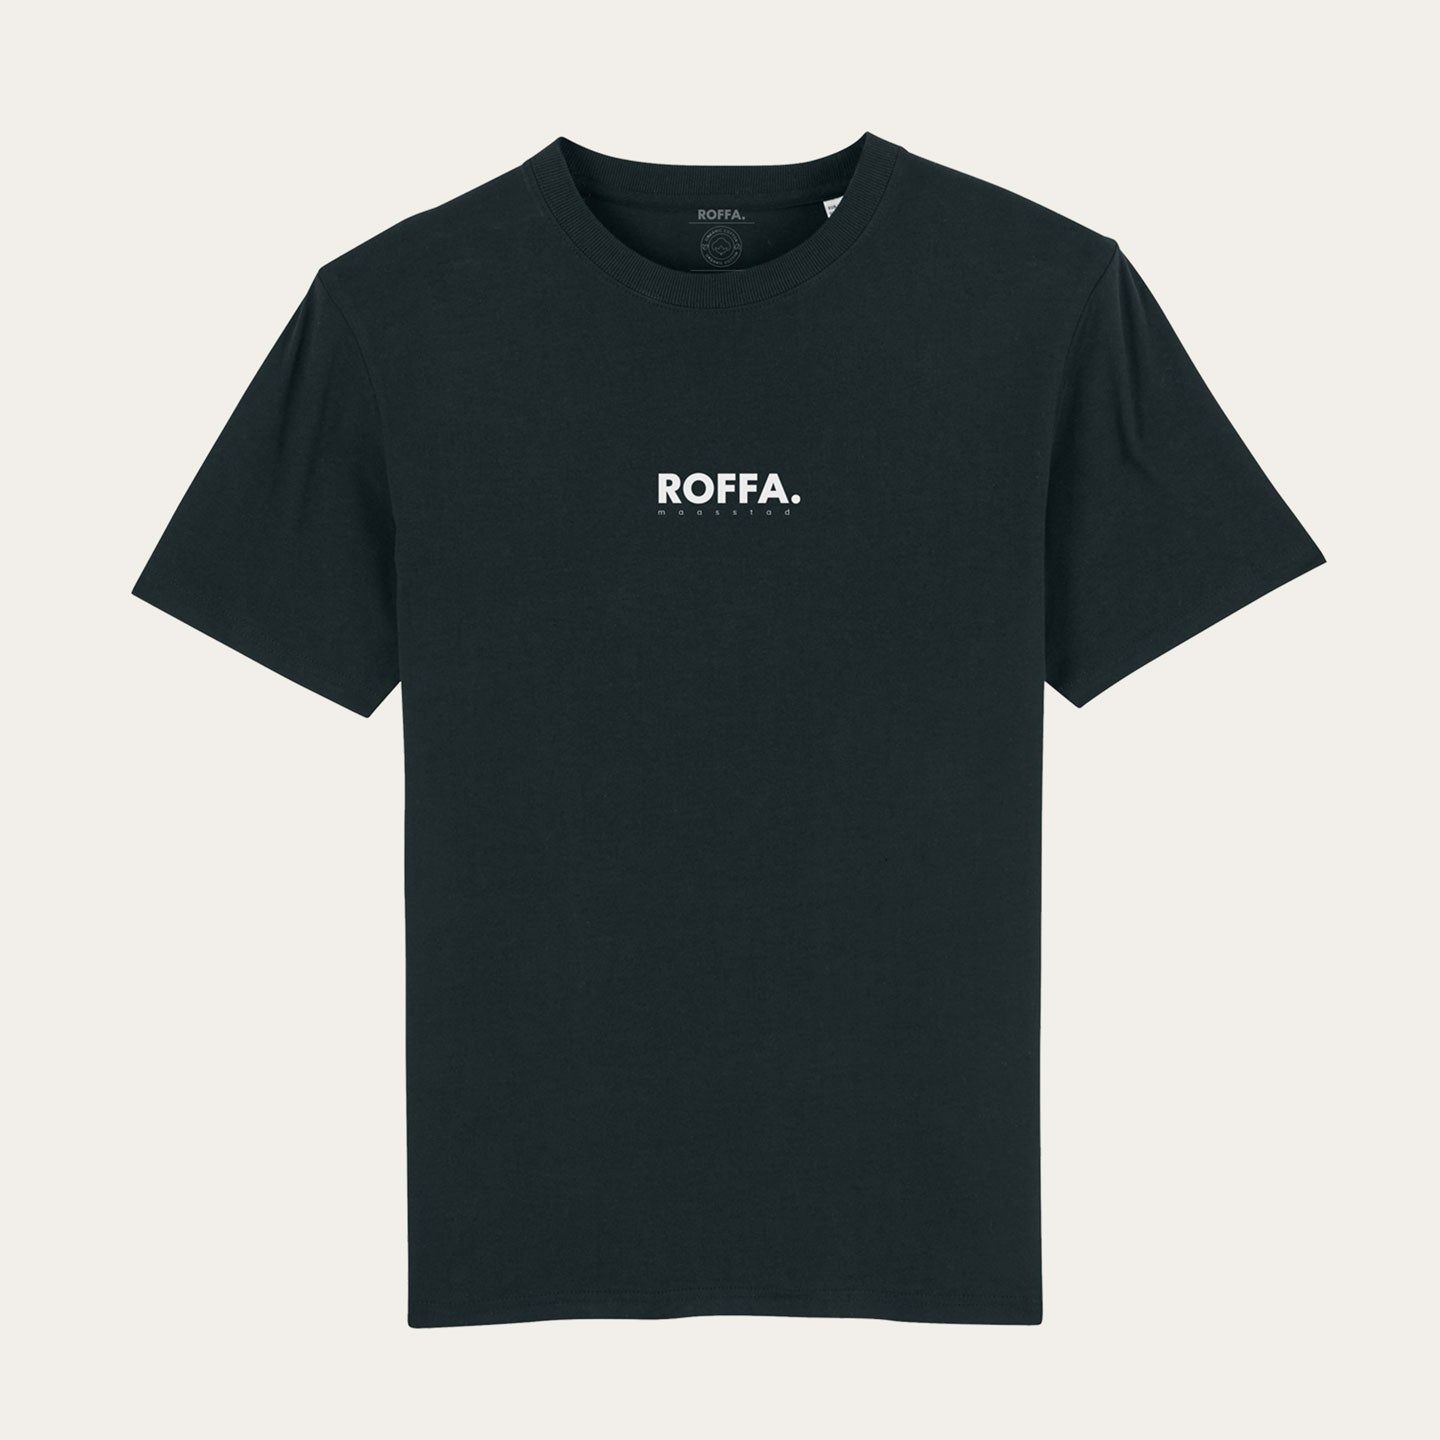 Zwart t-shirt met groot roffa logo